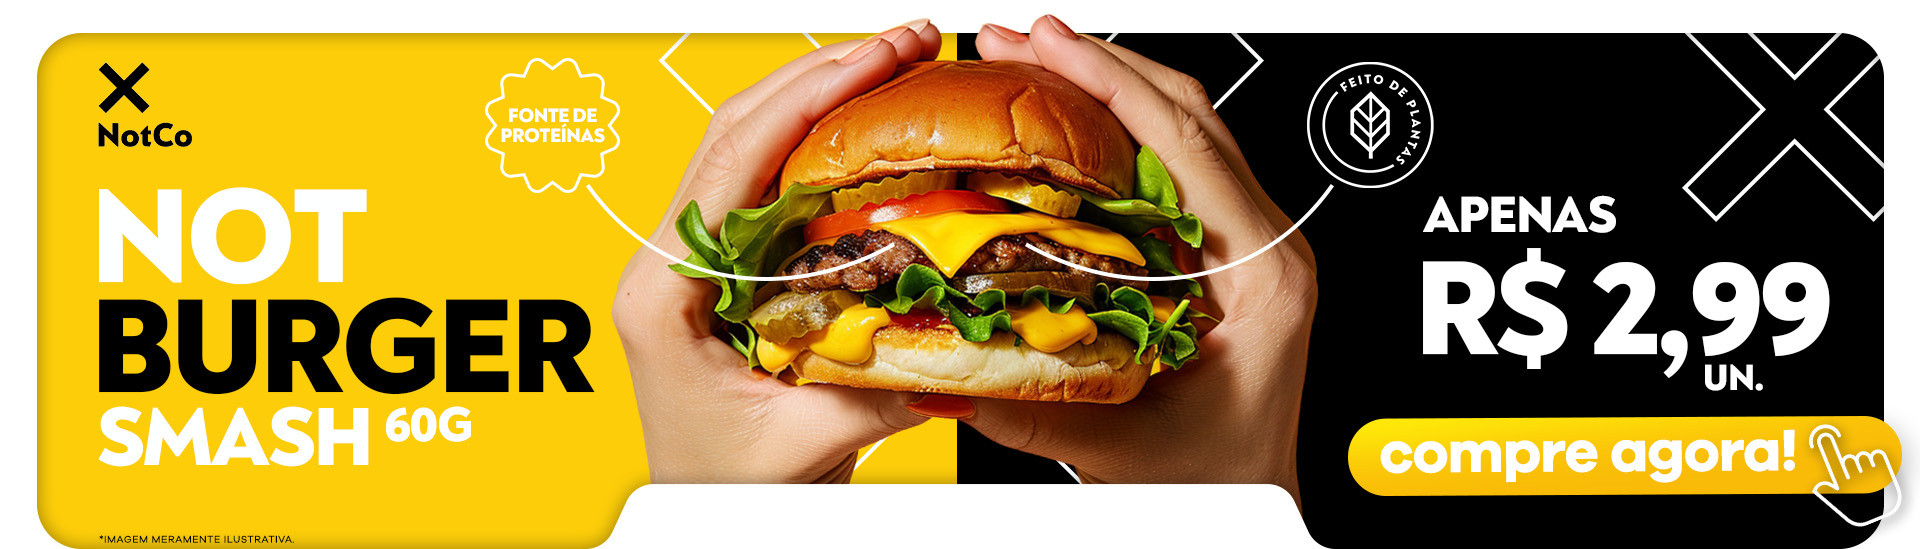 Banner Notco Burger Smash 60g